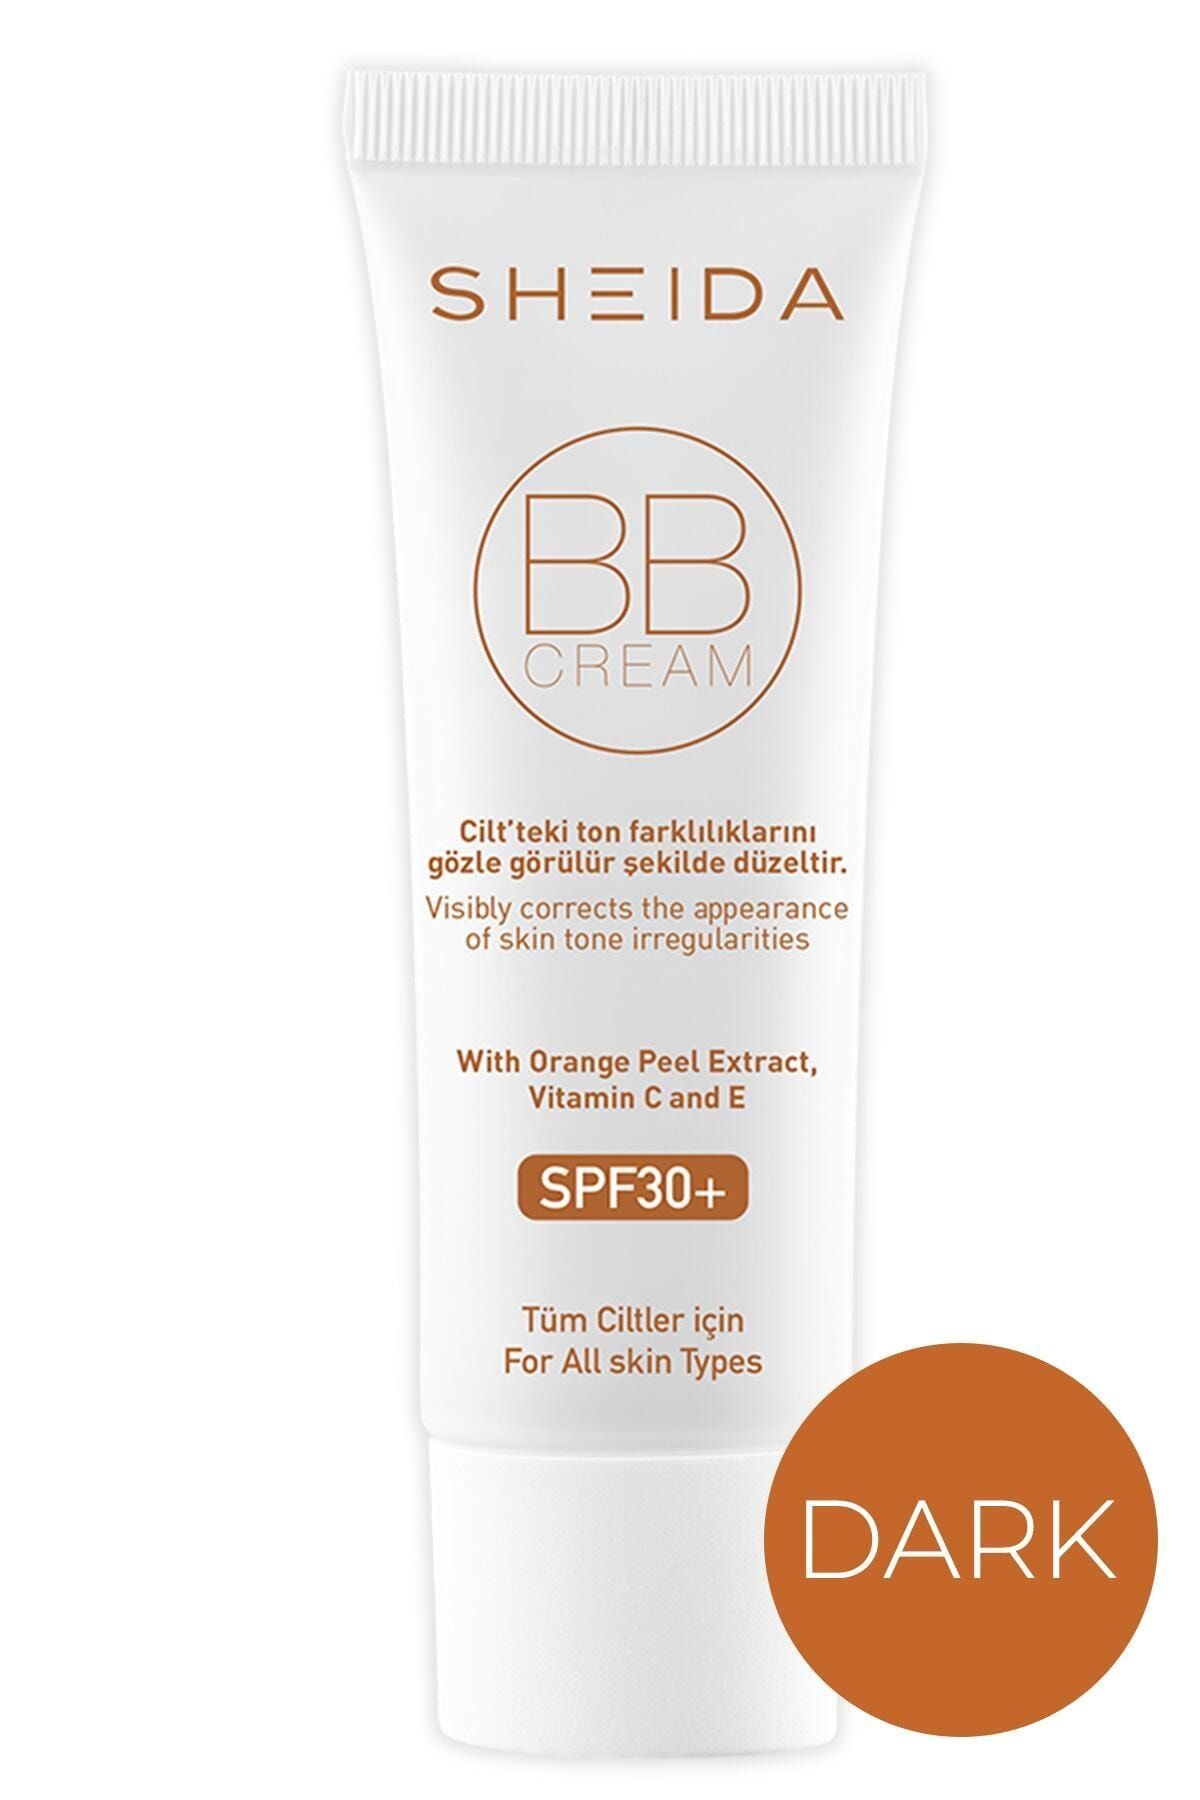 Sheida Bb Cream Dark 50ml